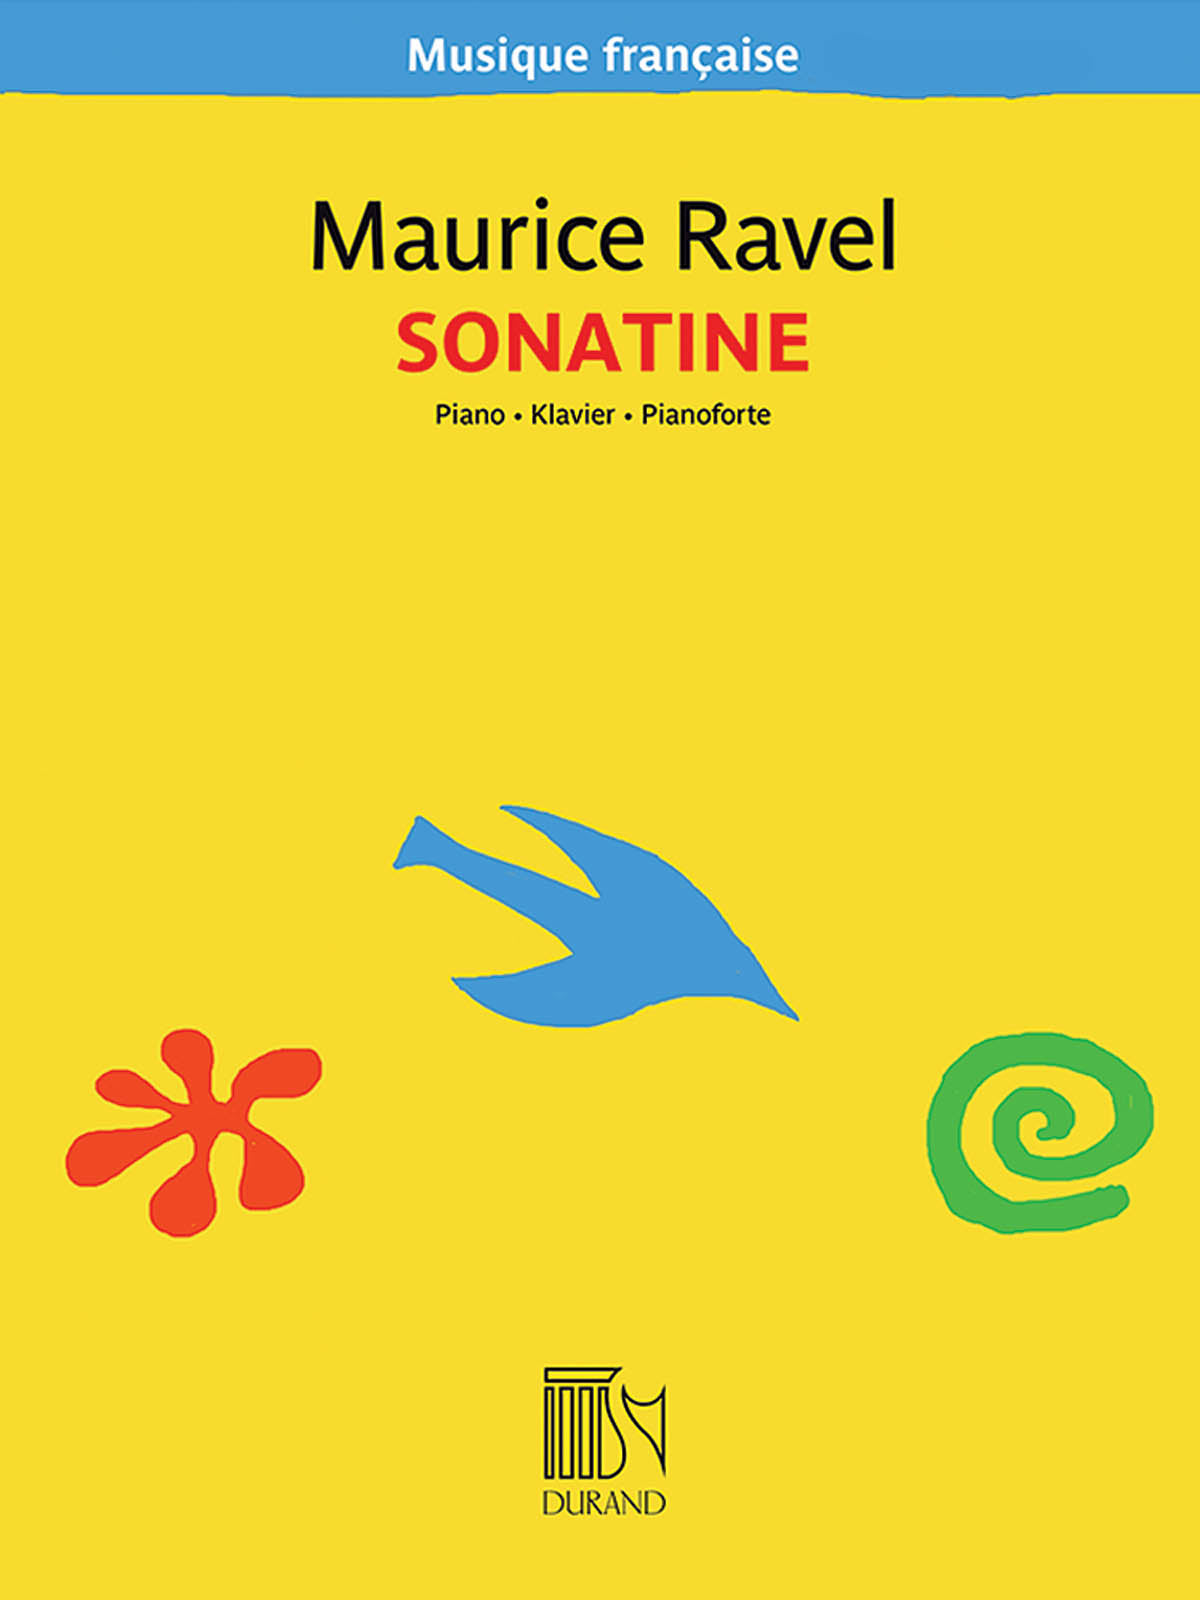 Ravel: Sonatine